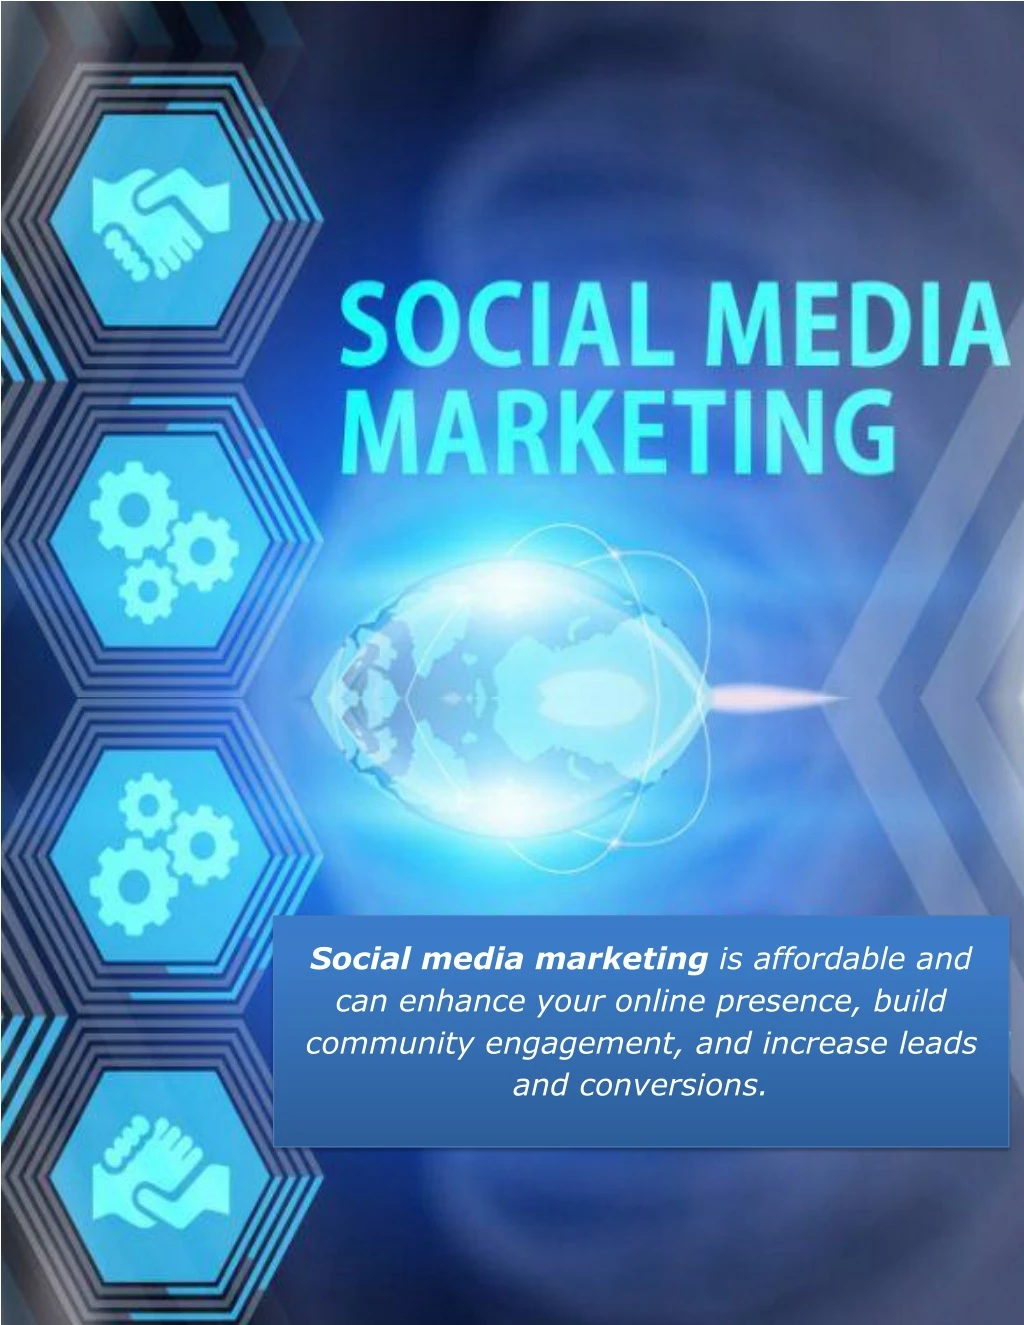 social media marketing is affordable